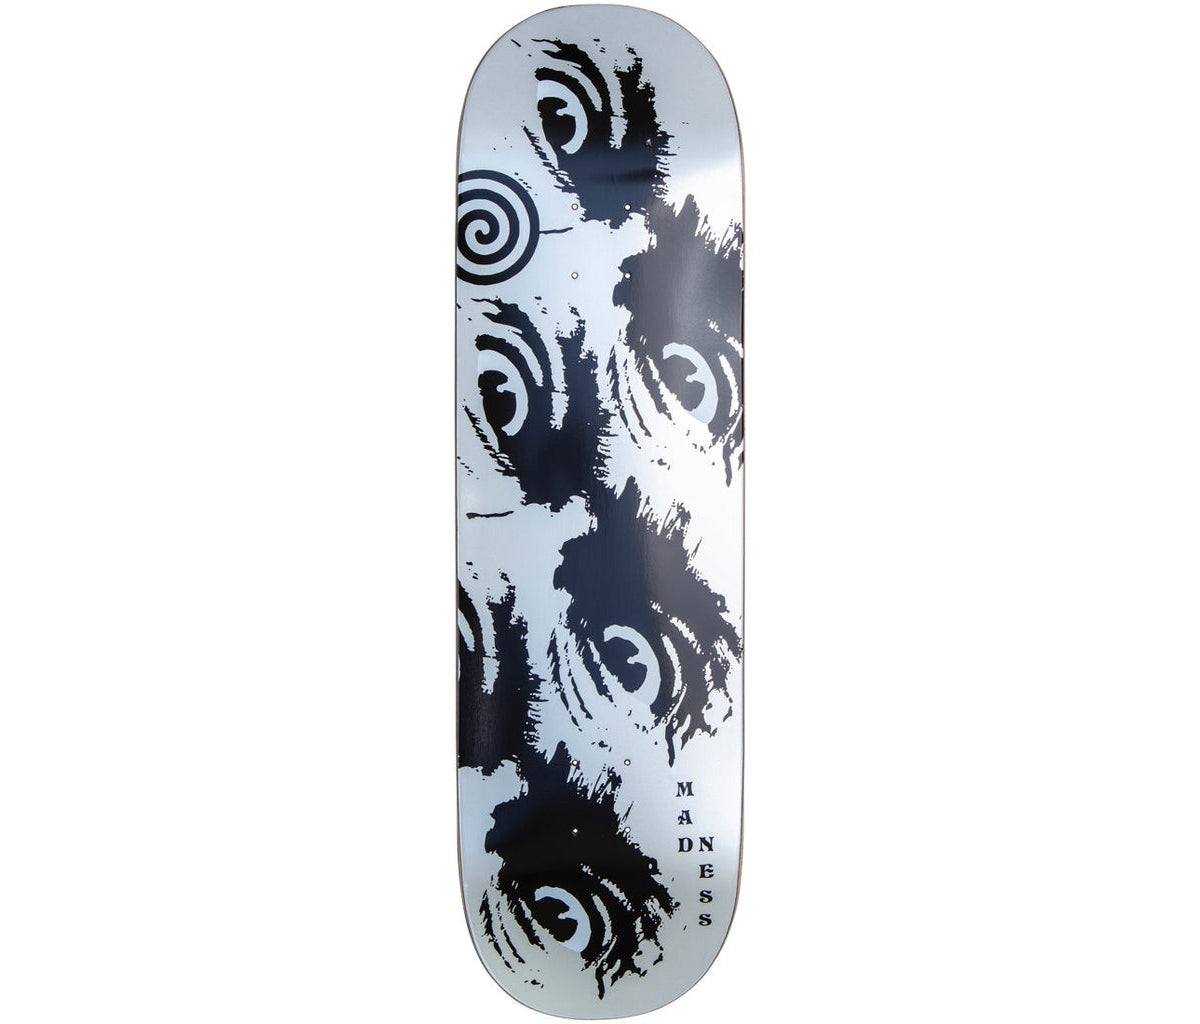 Madness Skateboards Side Eye Deck PearlWhite 9.0